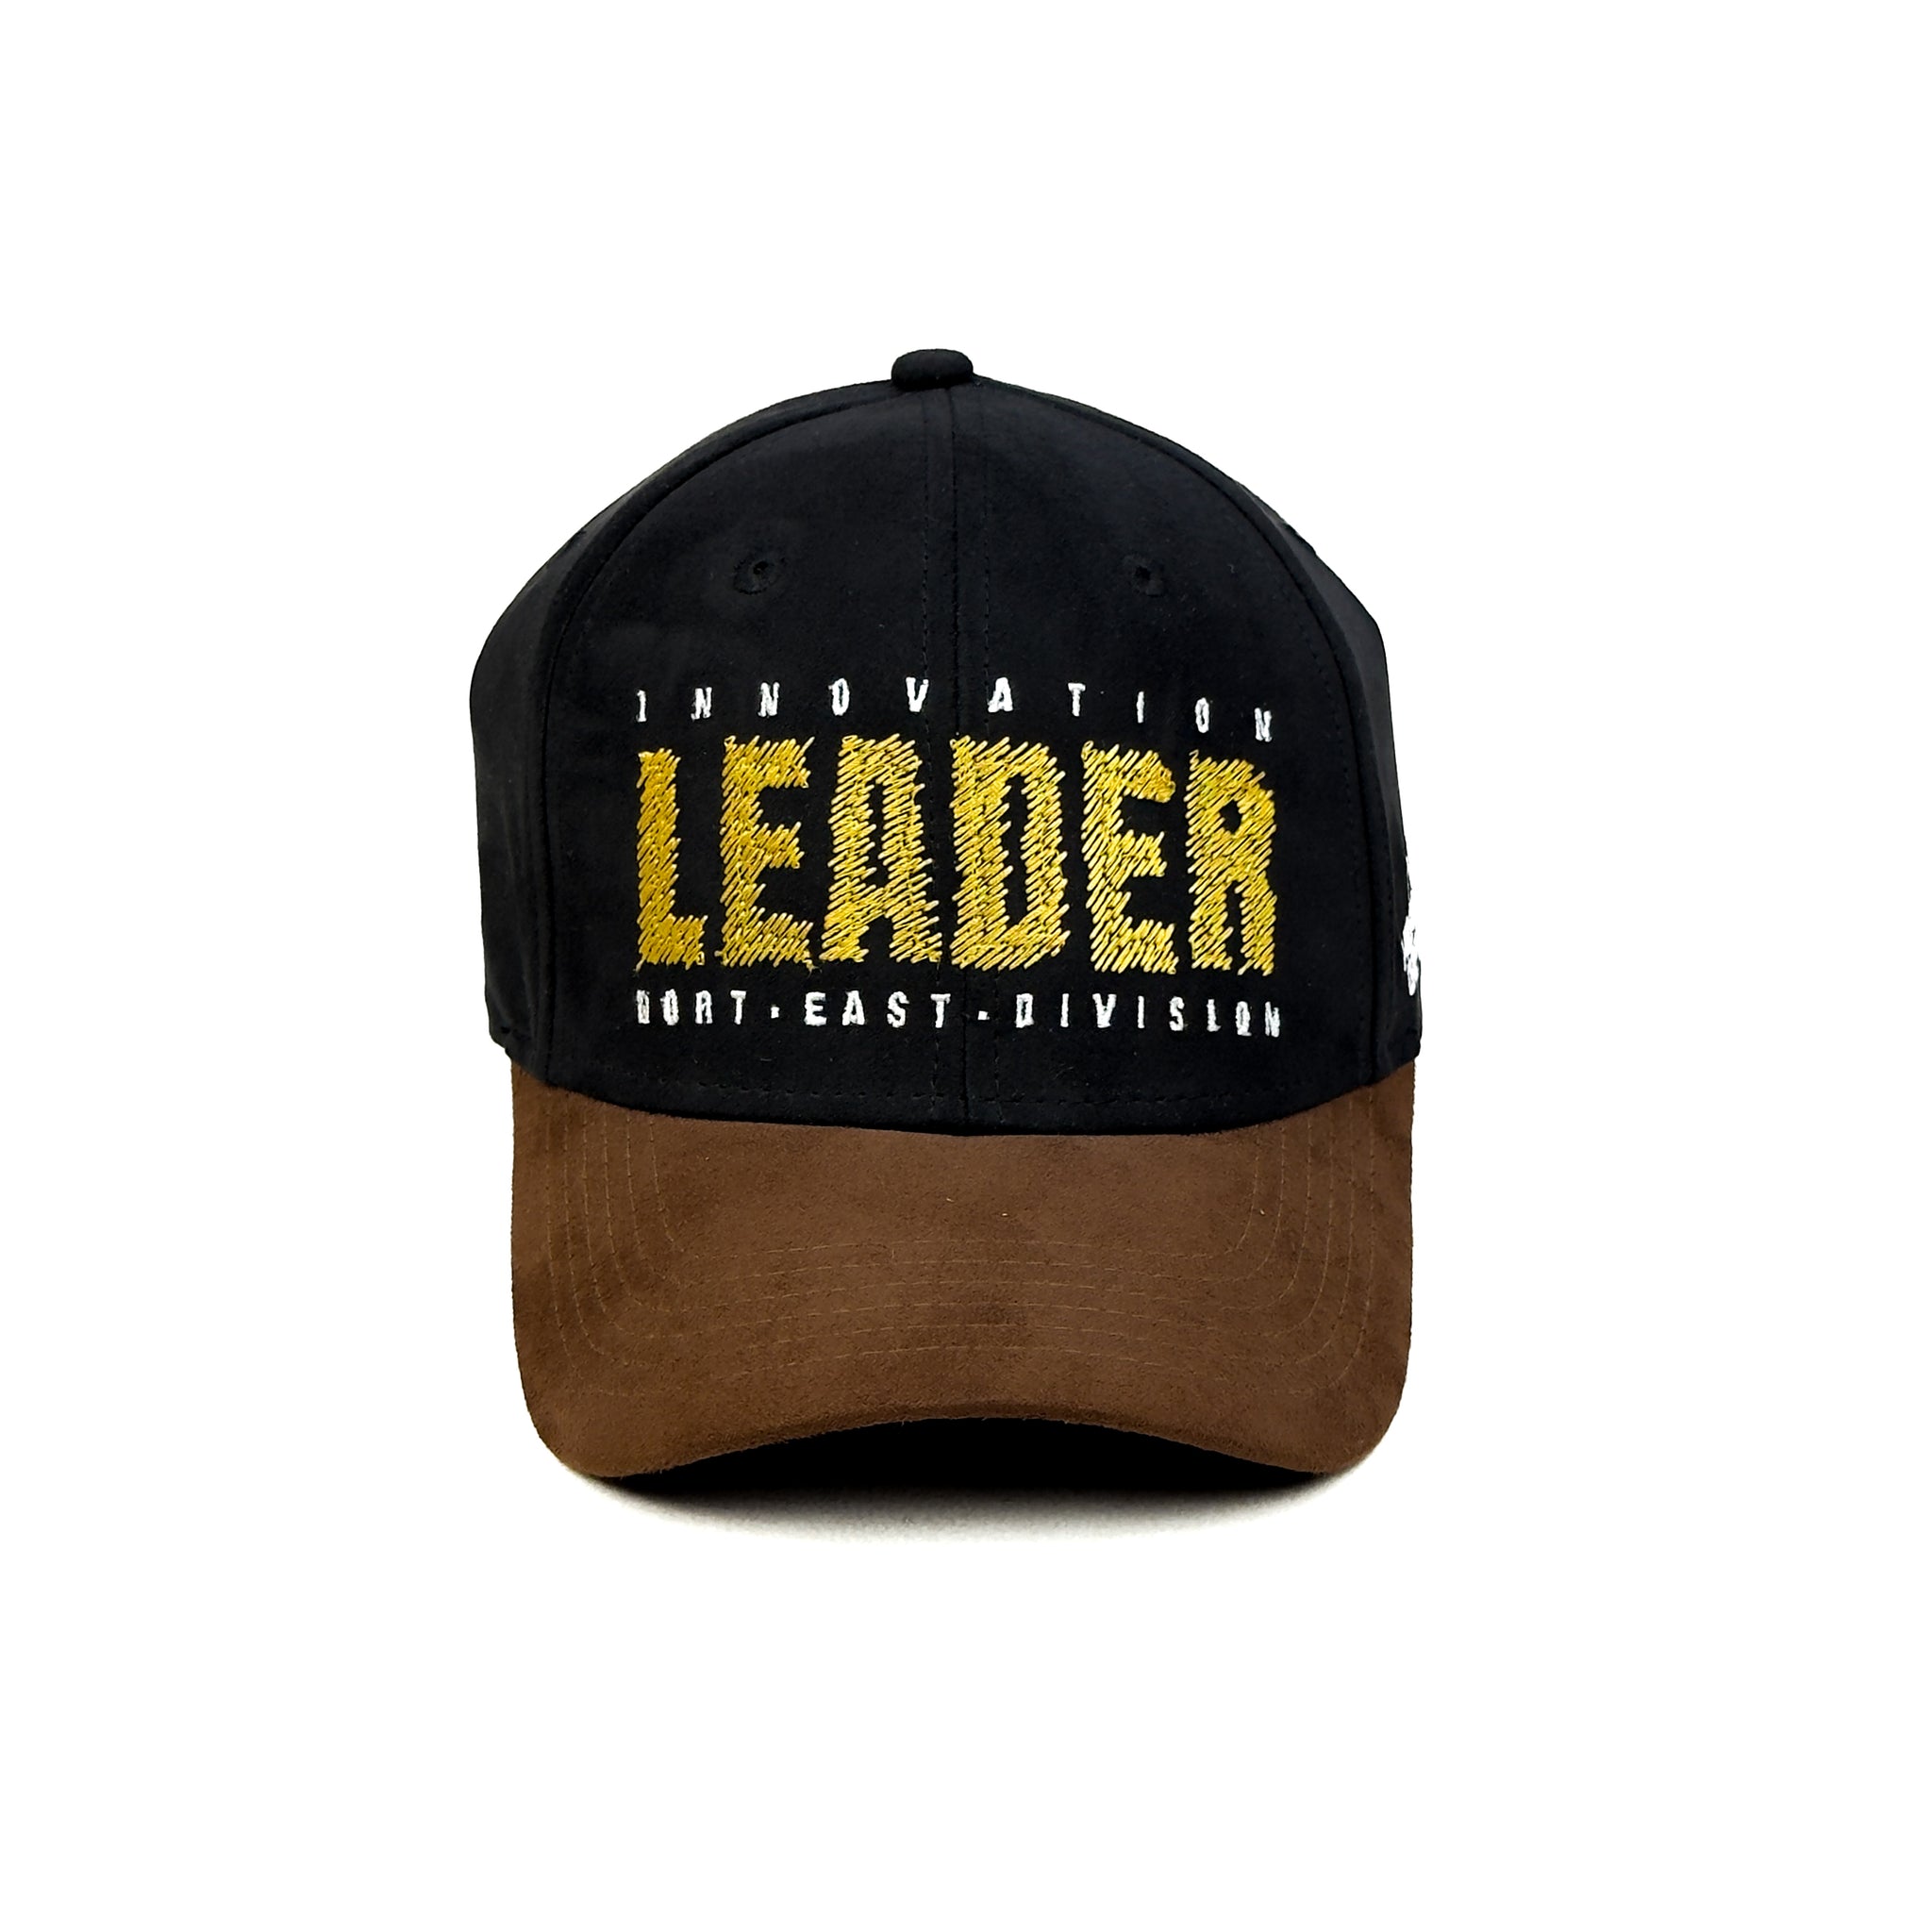 HEAD GEAR LEADER CAP